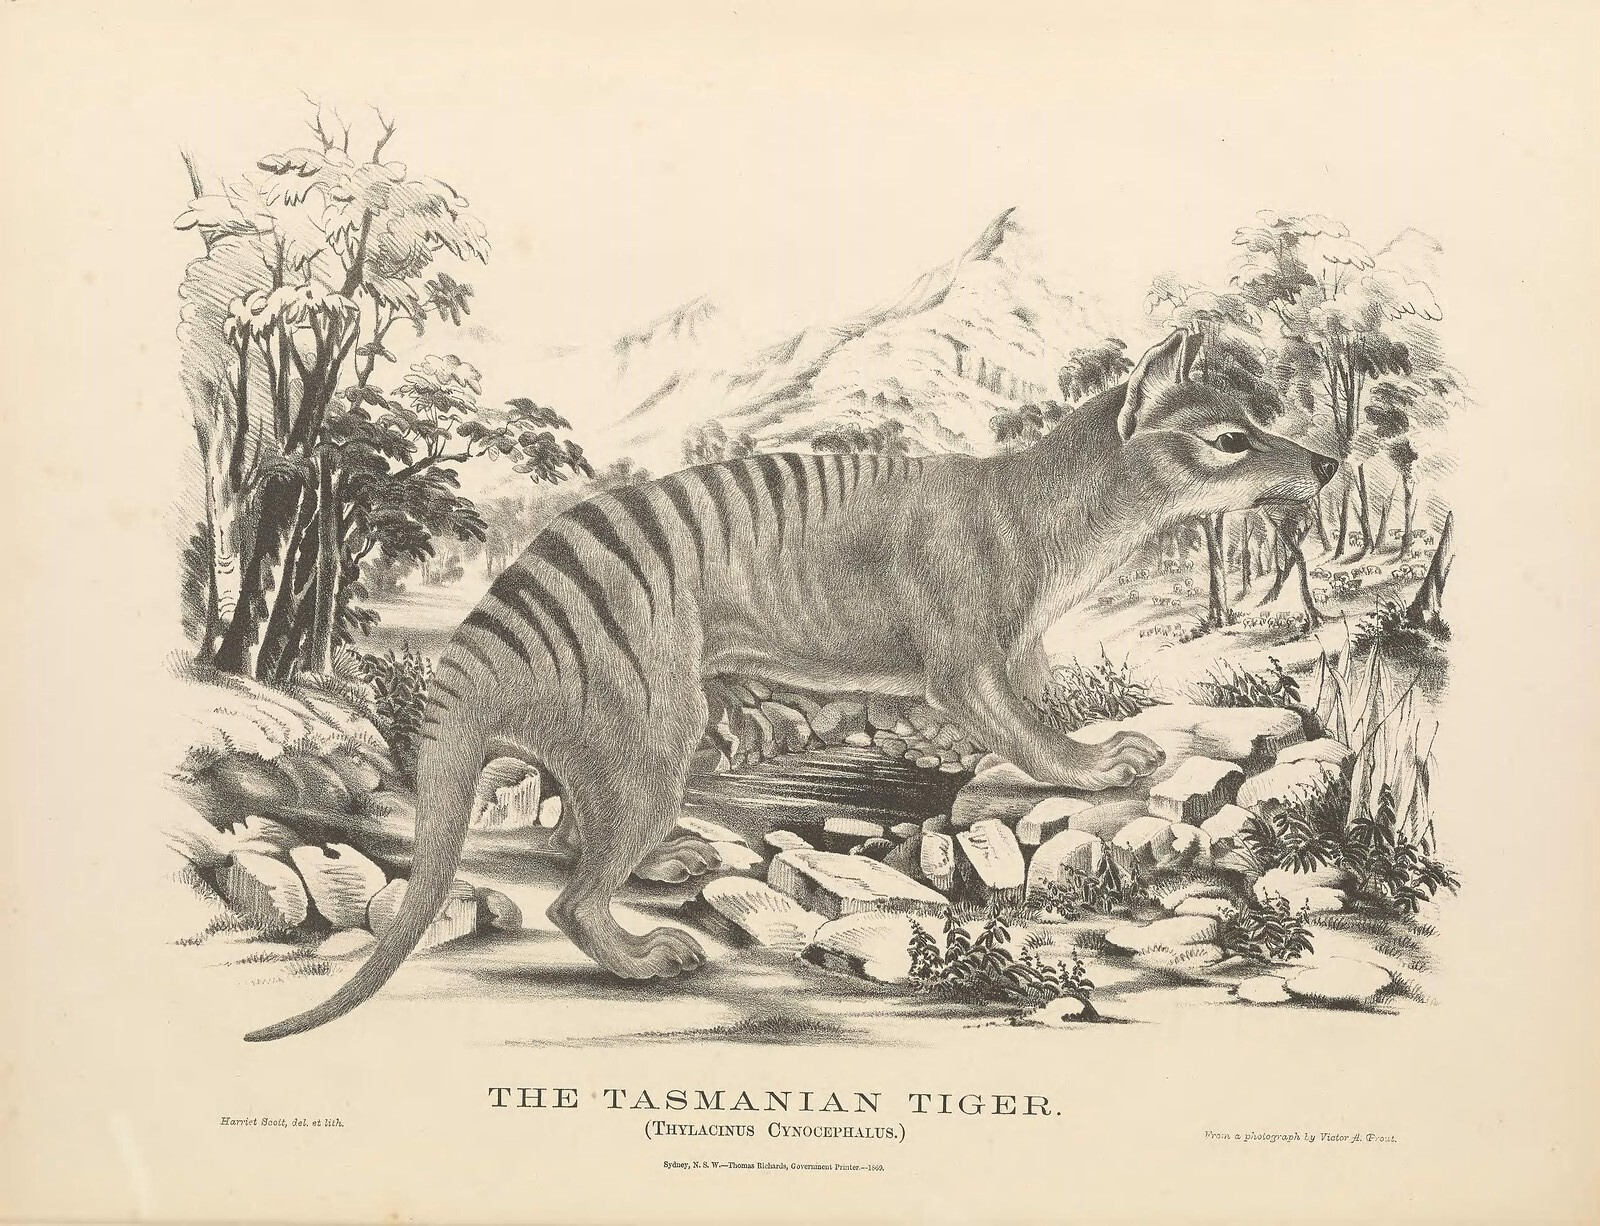 Thylacine extinction: Tasmanian tiger marsupial de-extinction